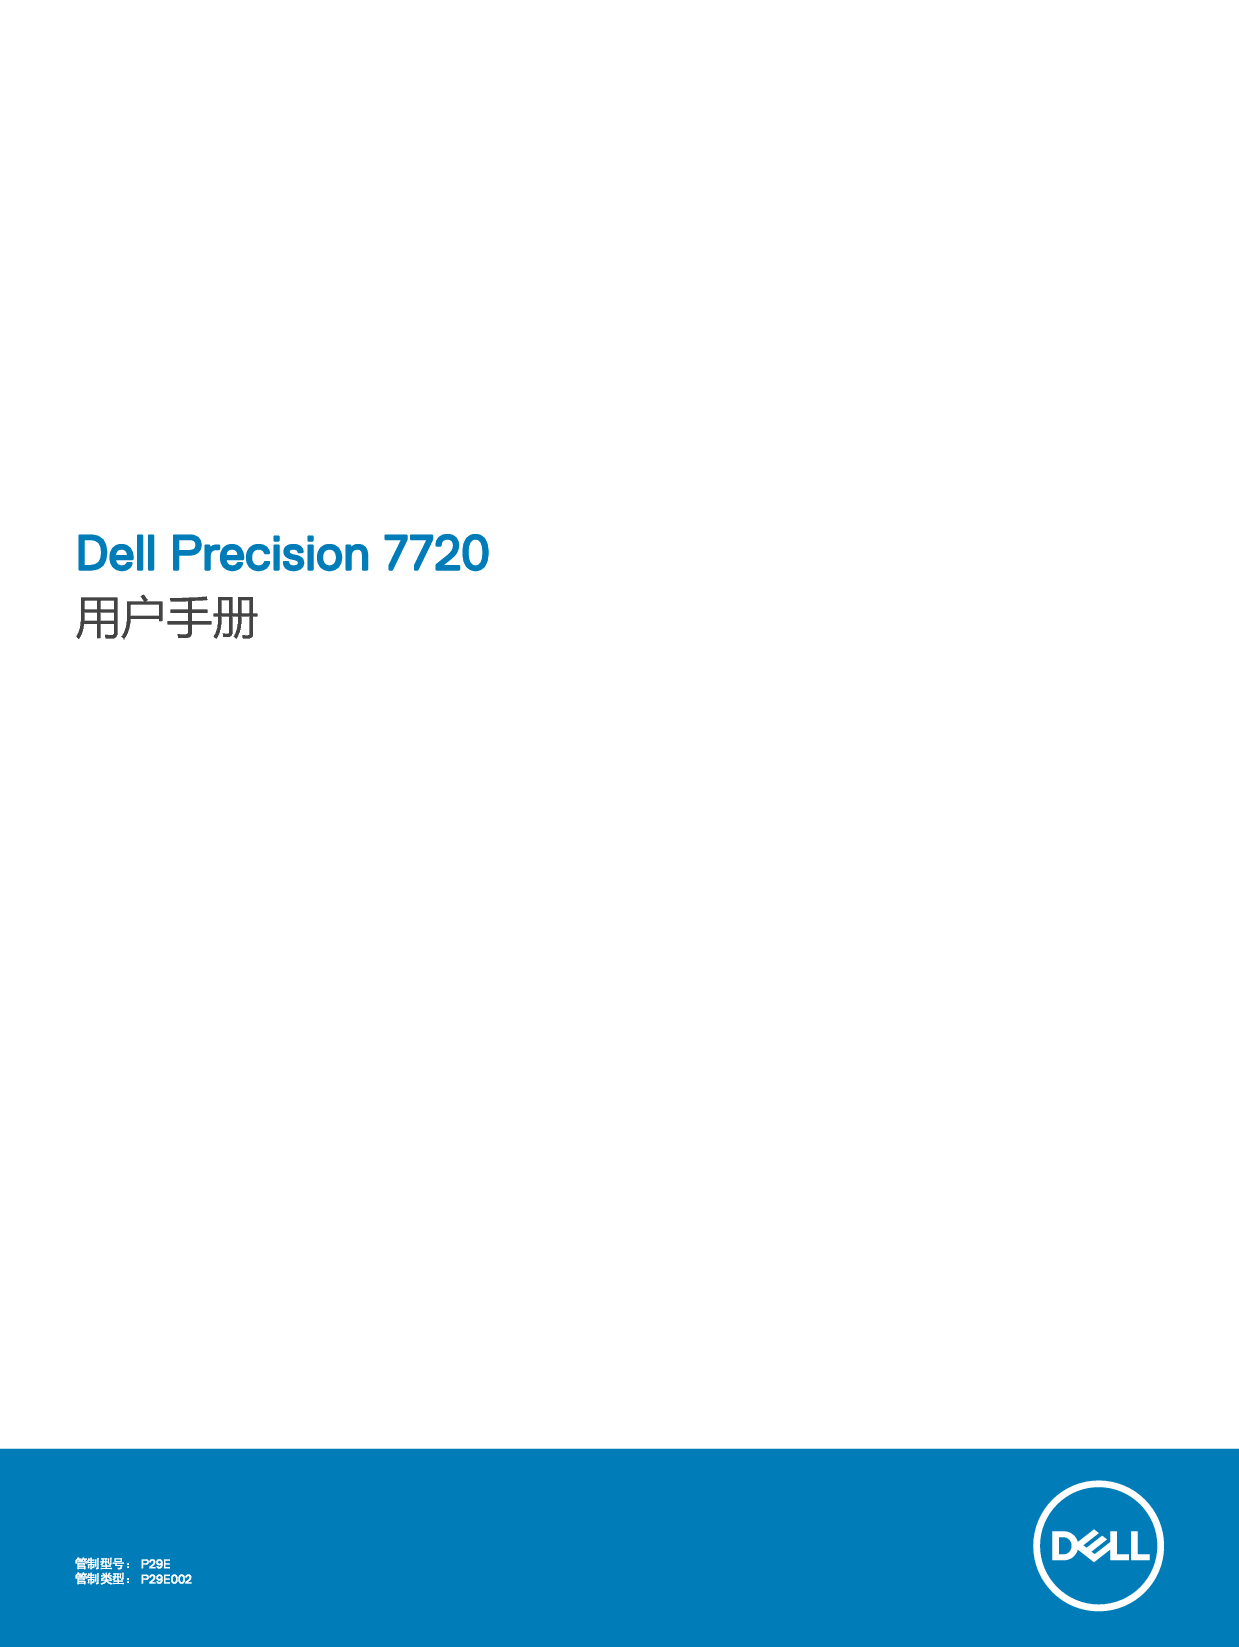 戴尔 Dell Precision 7720 用户手册 封面